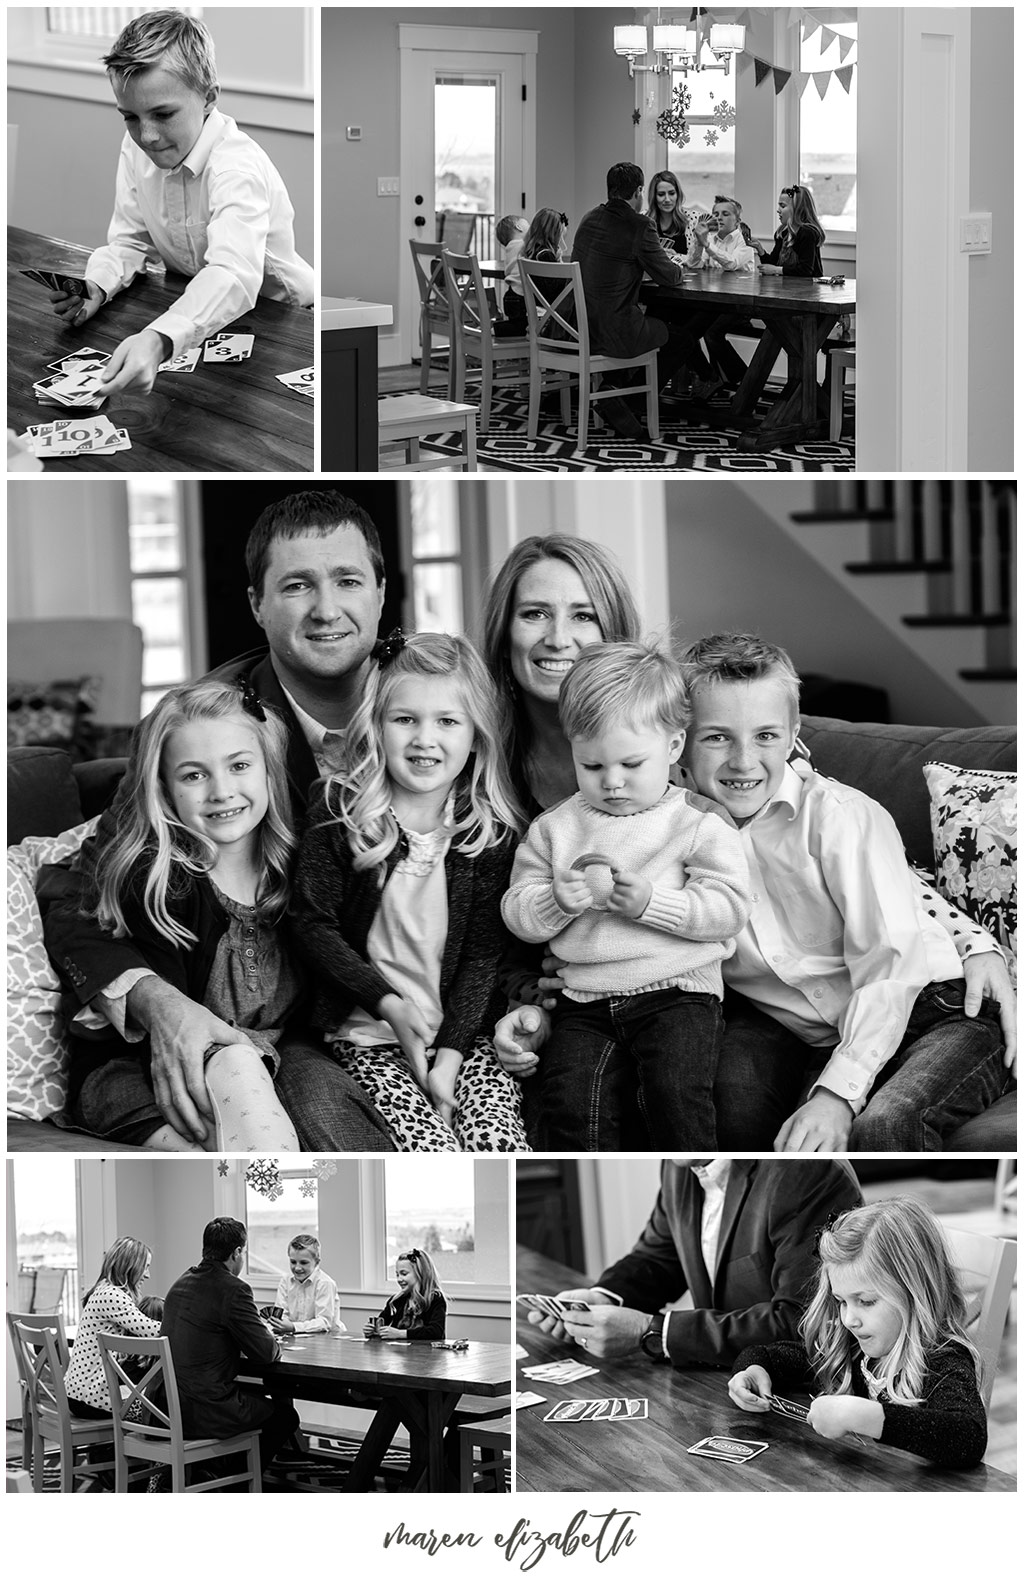 Lifestyle family pictures at home | Arizona Photographer | Maren Elizabeth Photography.